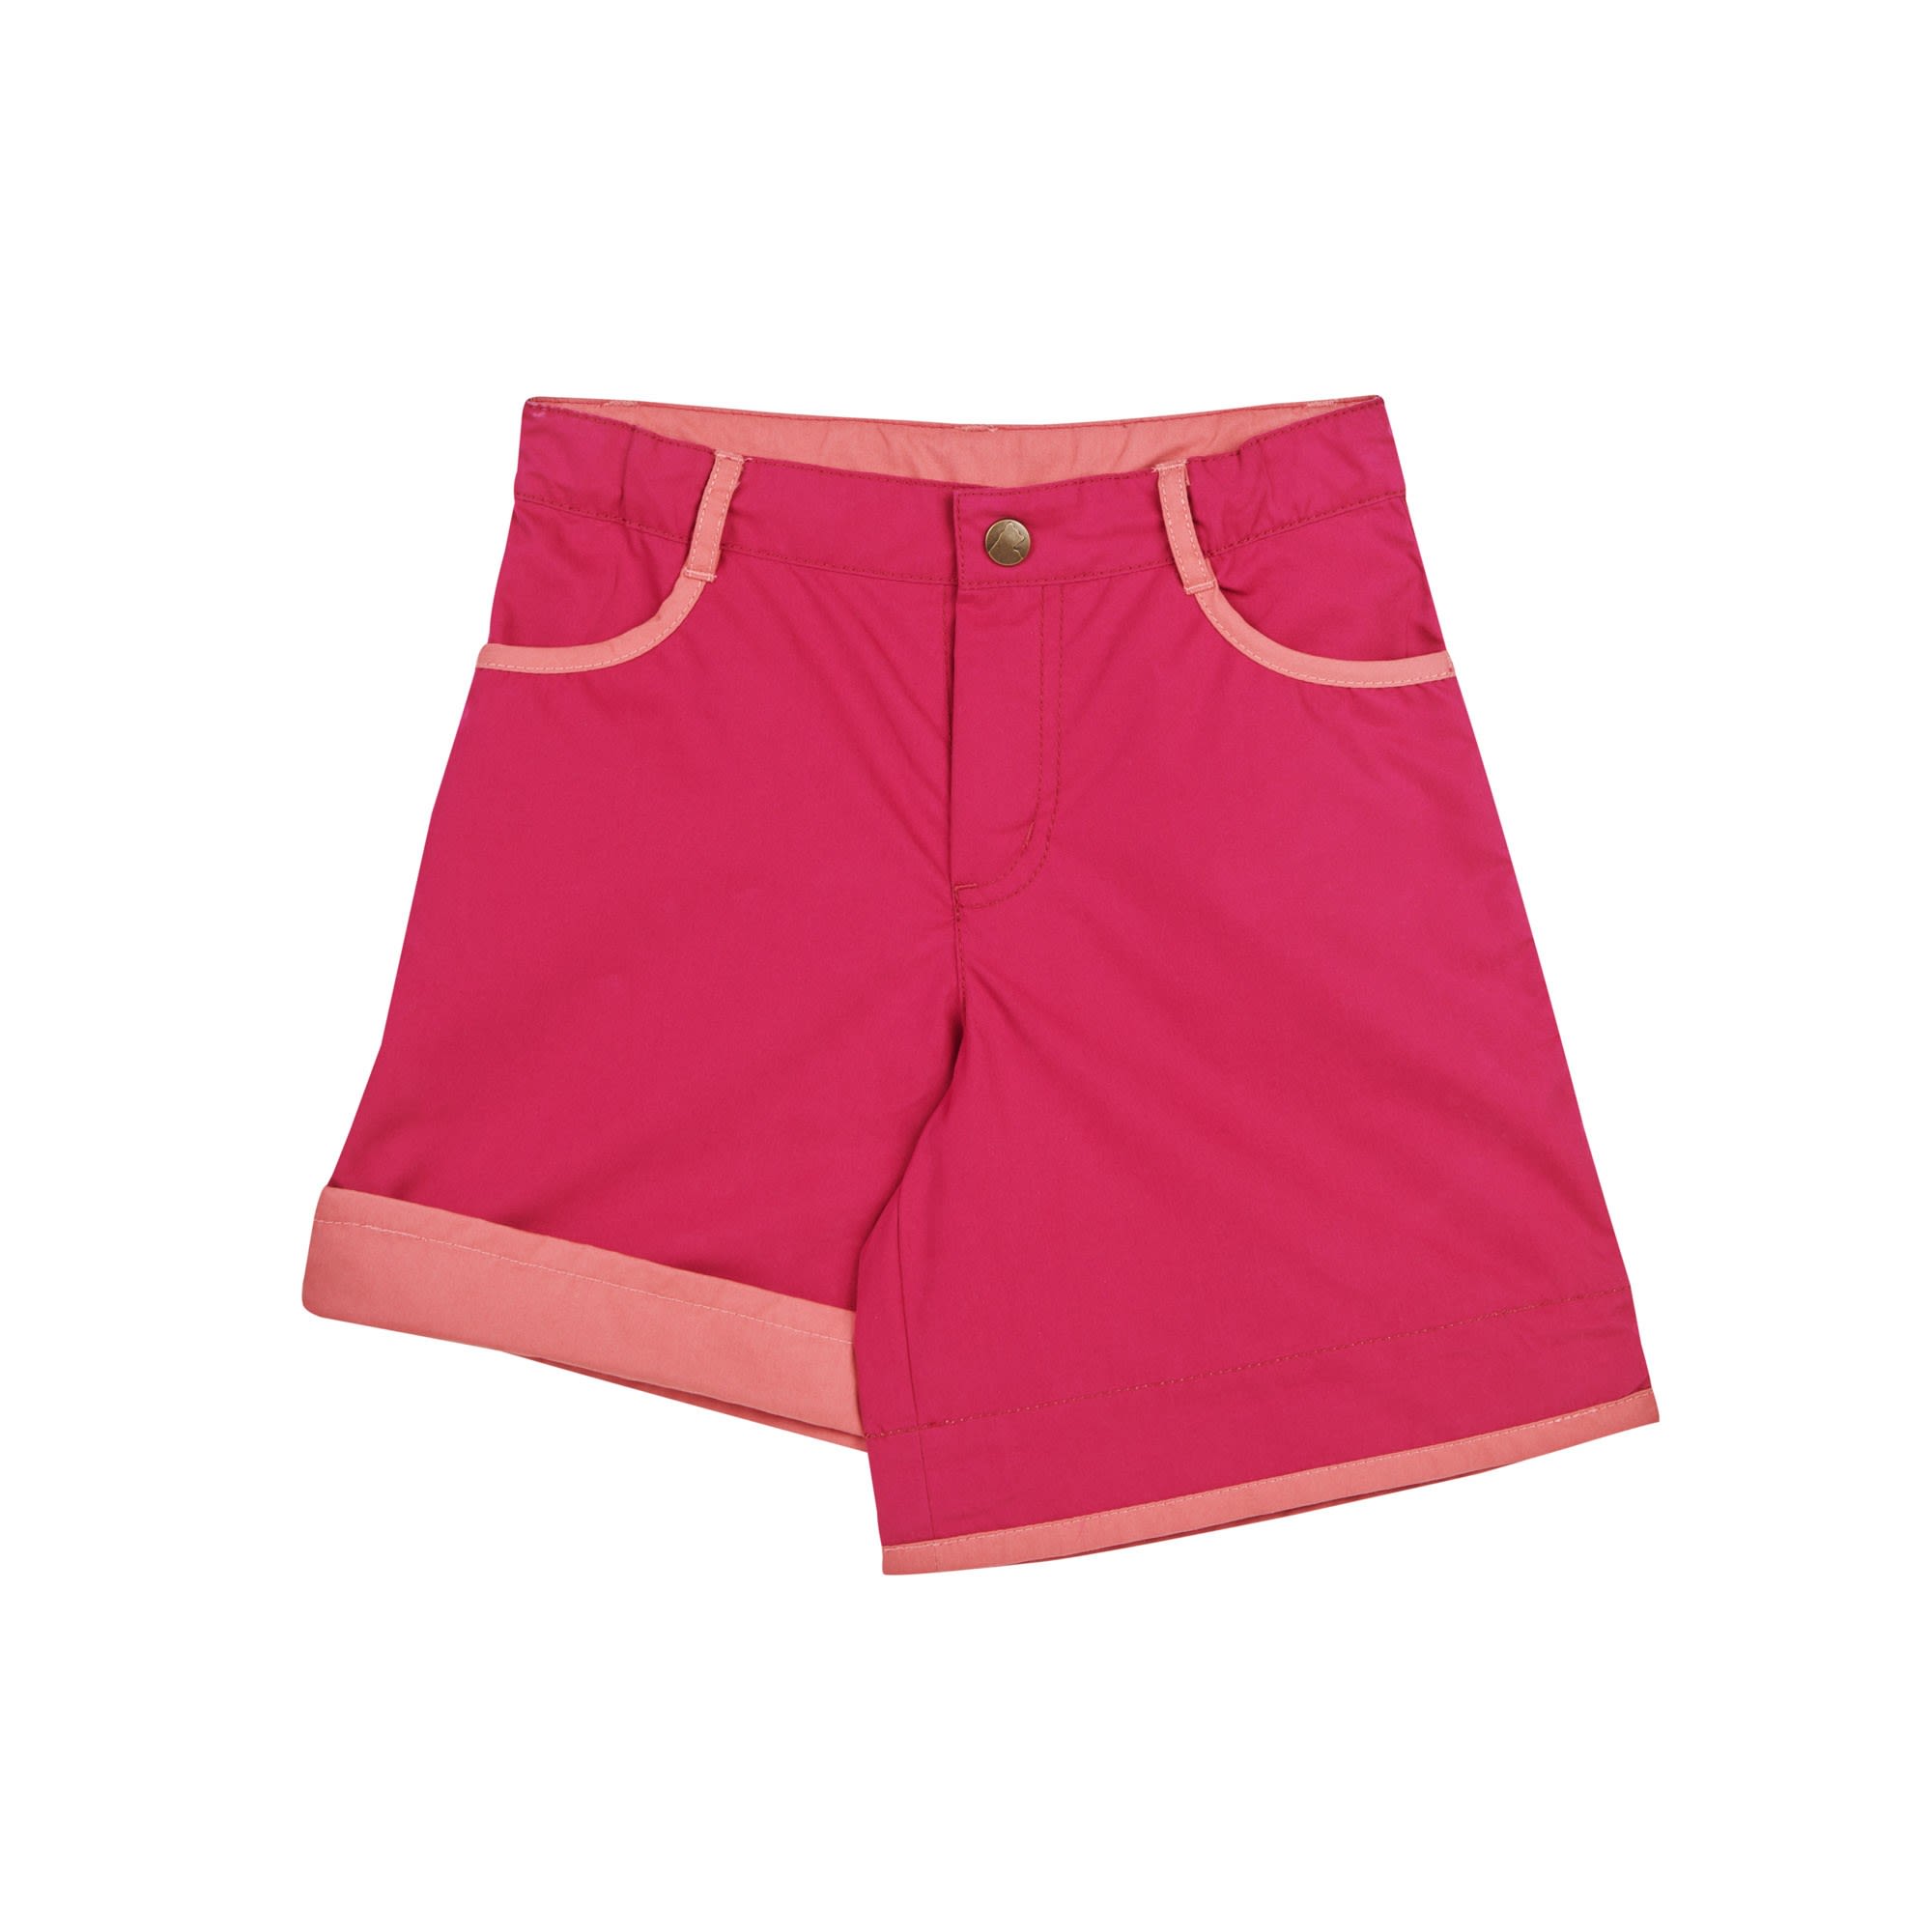 Finkid Girls Kuukkeli Pink- Female Shorts- Grsse 80 - 90 - Farbe Beet Red - Rose unter Finkid